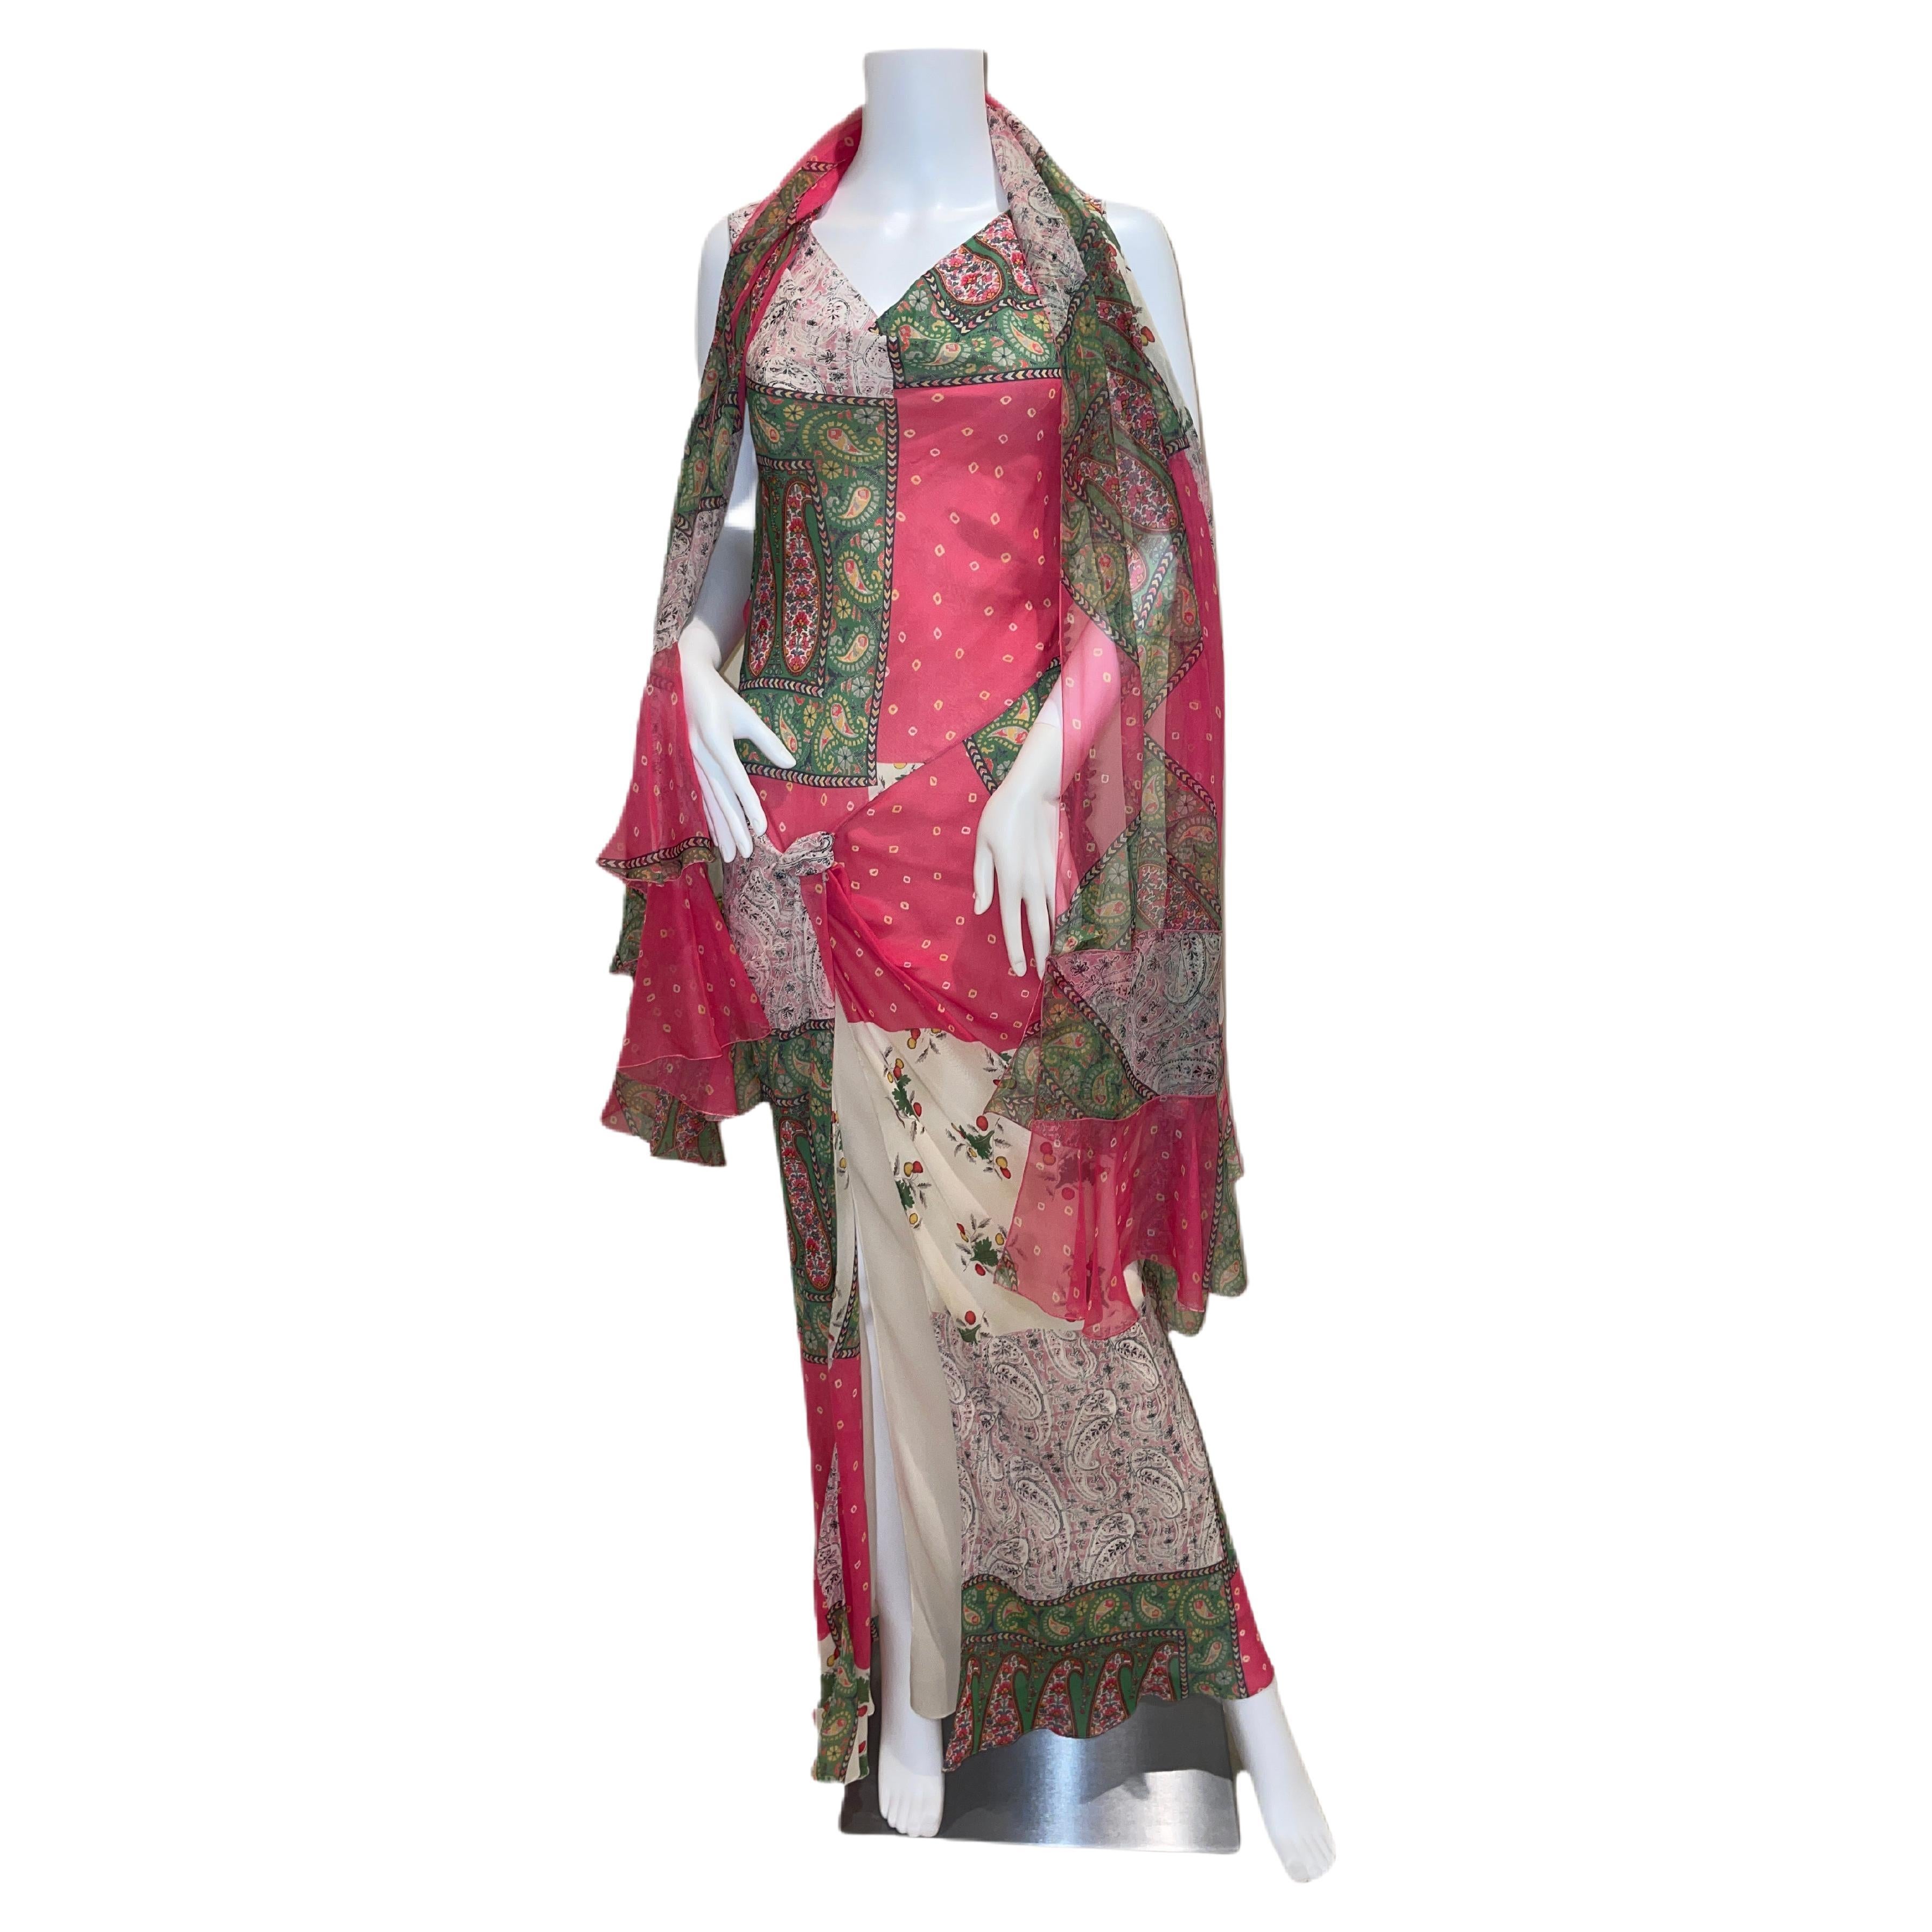 DIOR GALLIANO '04 gown ensemble paisley print maxi dress evening